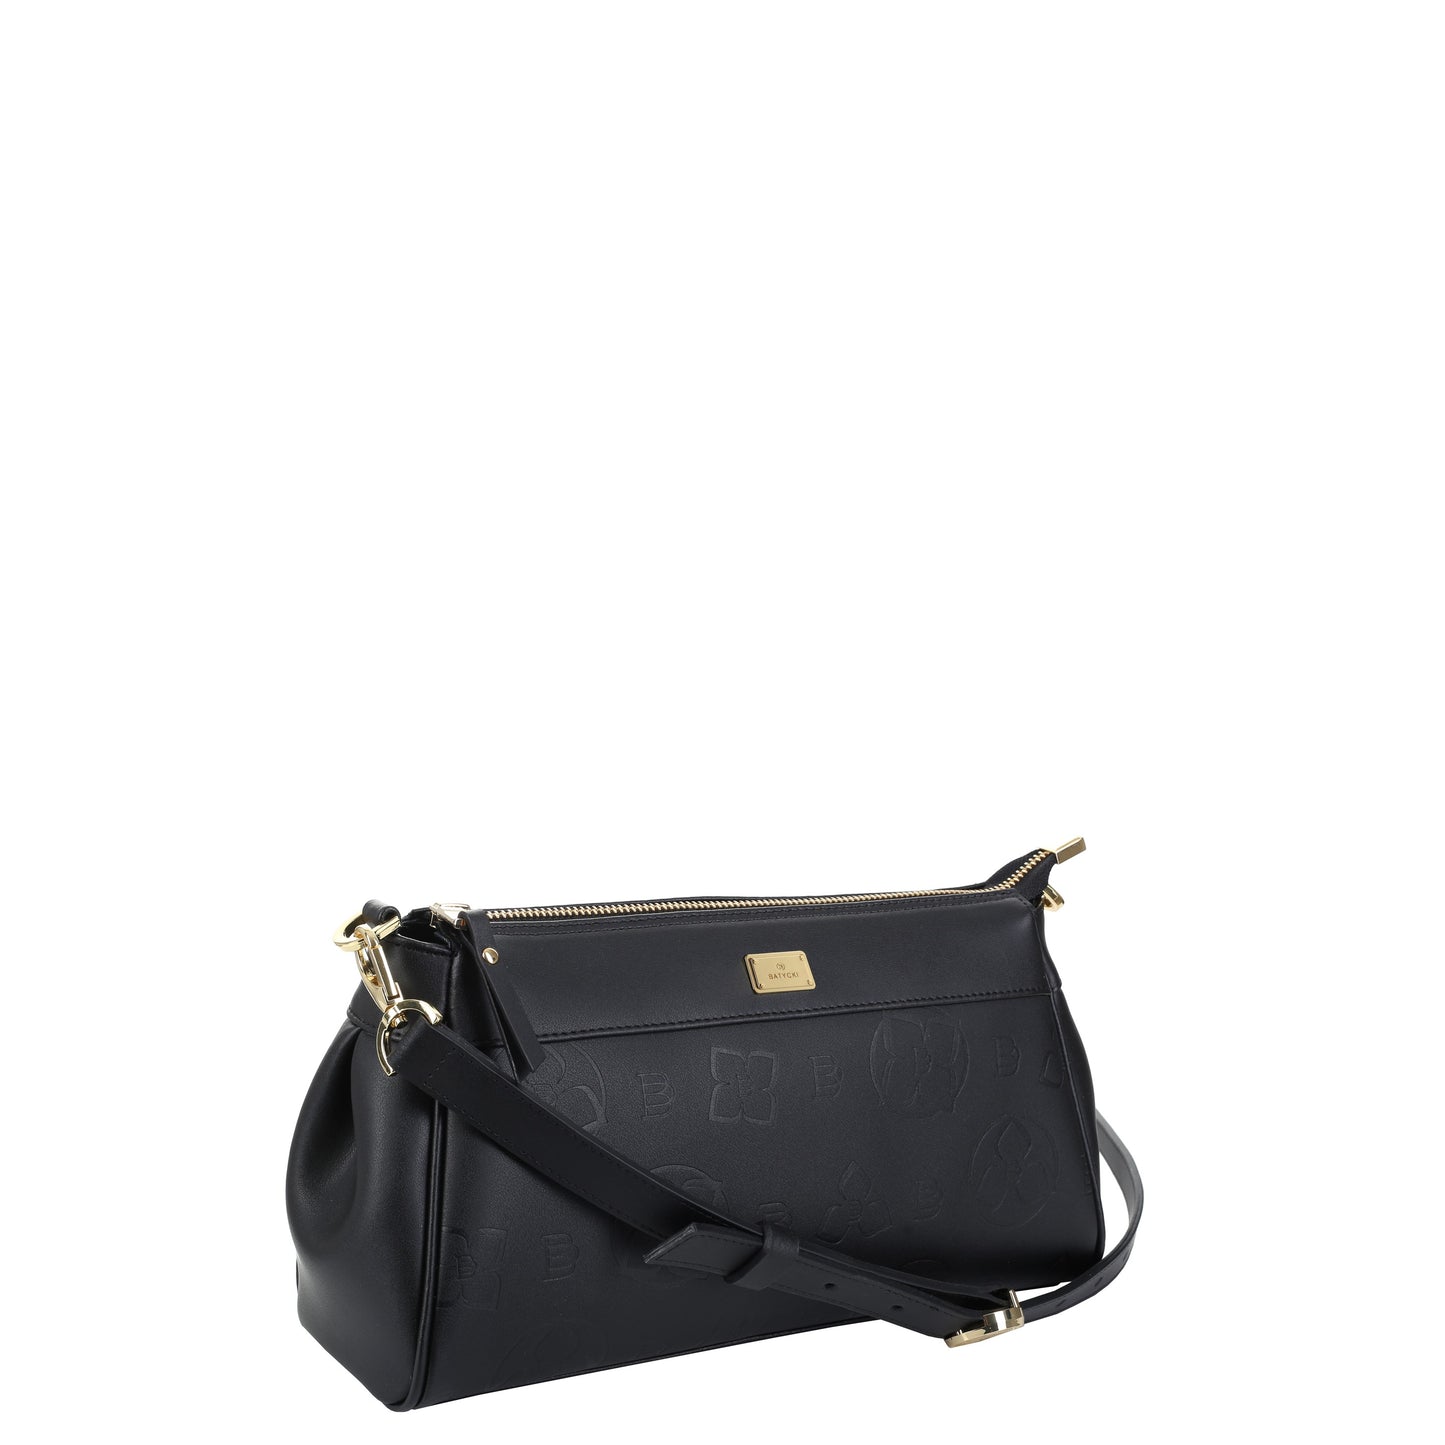 LEVRE NAPA BLACK women's leather handbag